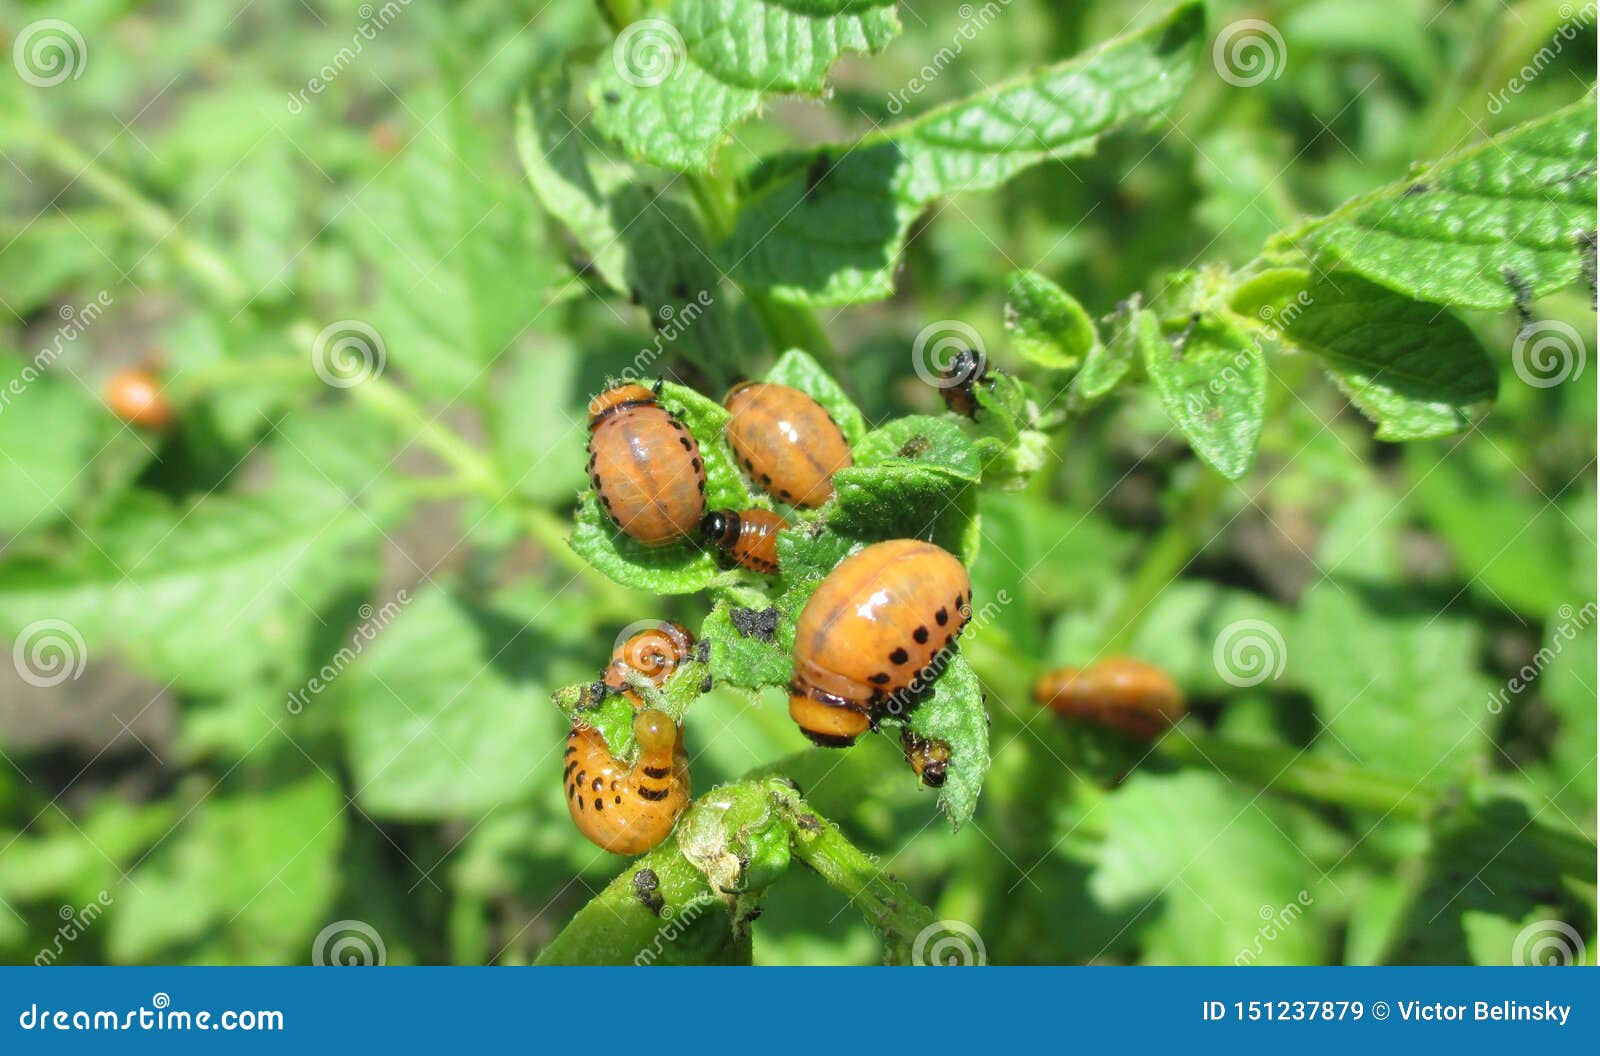 Colorado Potato Beetle Larvae On Young Potato Leaves Numerous